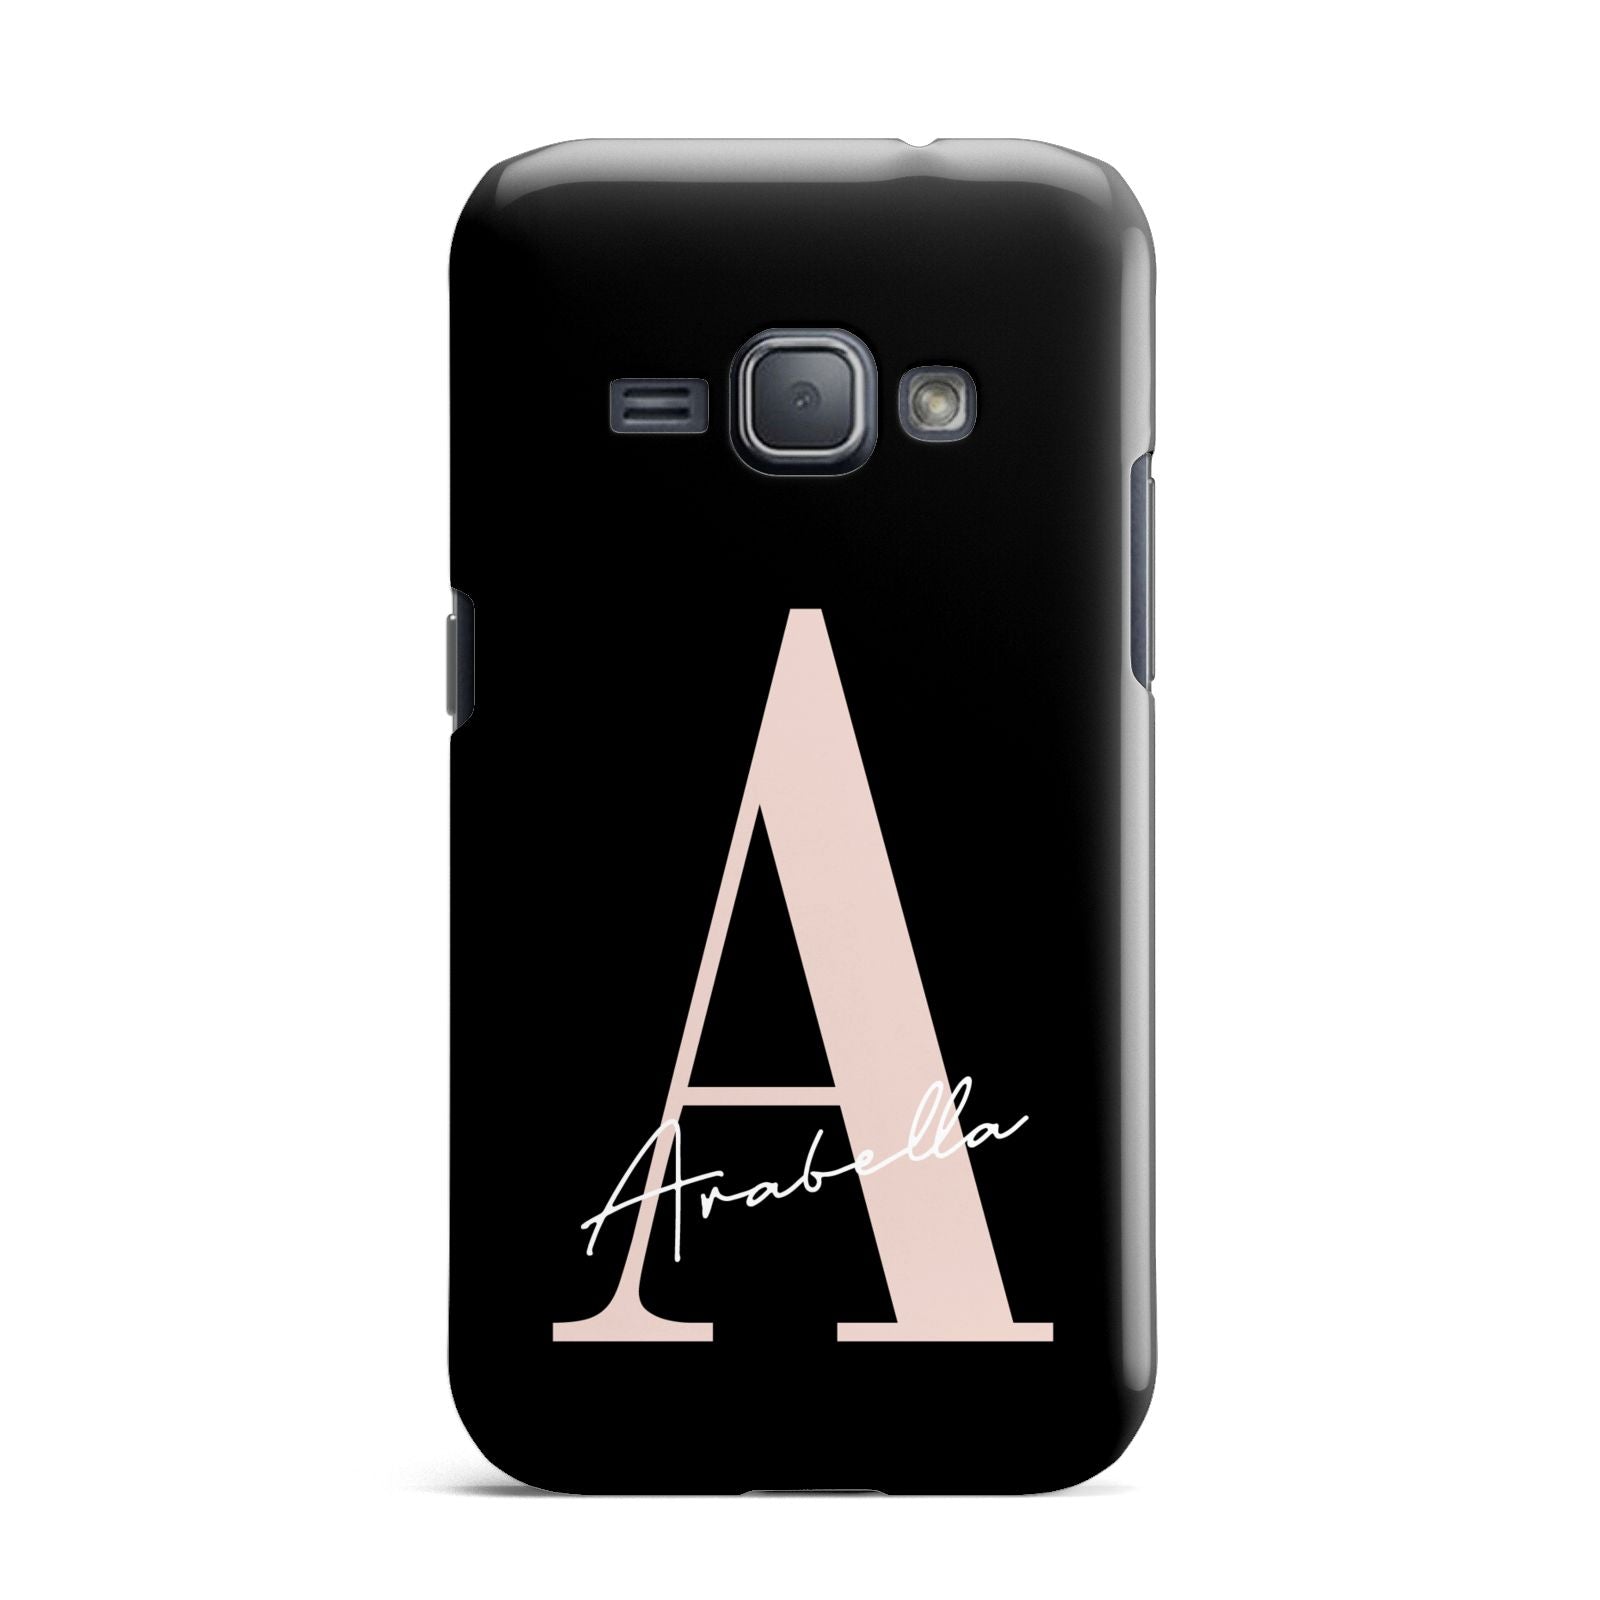 Personalised Black Pink Initial Samsung Galaxy J1 2016 Case